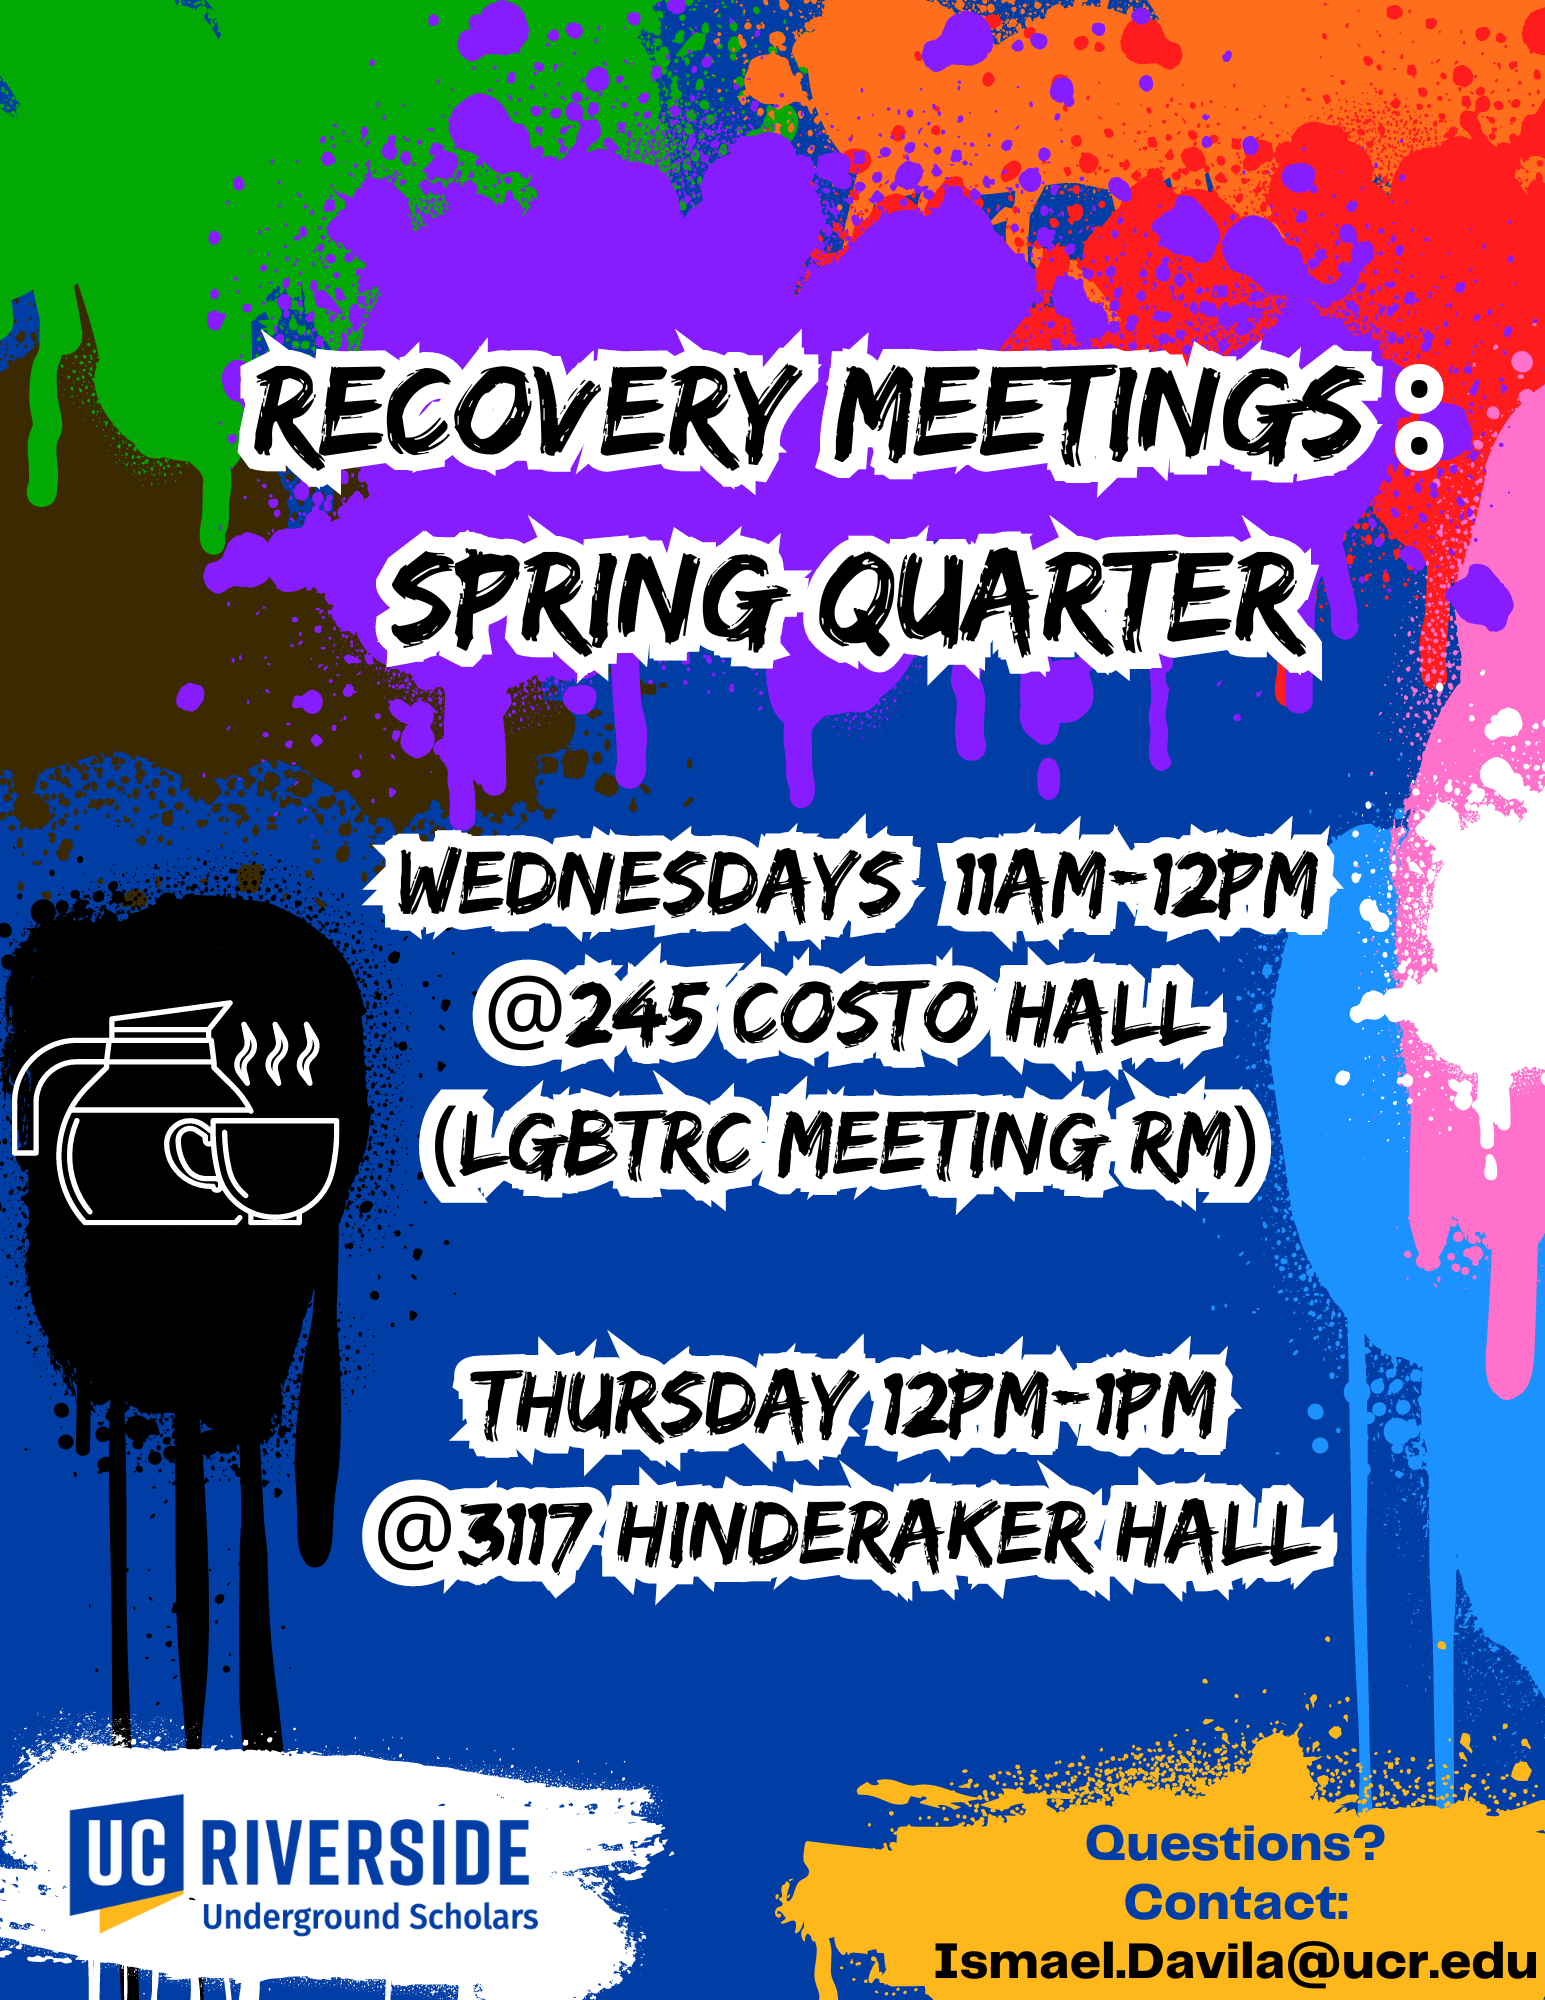 Recovery Meeting Spring Quarter 2024 Wednesdays 11am -12PM 245 costo hall LGBTRC meeting and Thursday 12 -1 PM 3117 Hinderaker Hall. Questions call Isamel.davila@ucr.edu